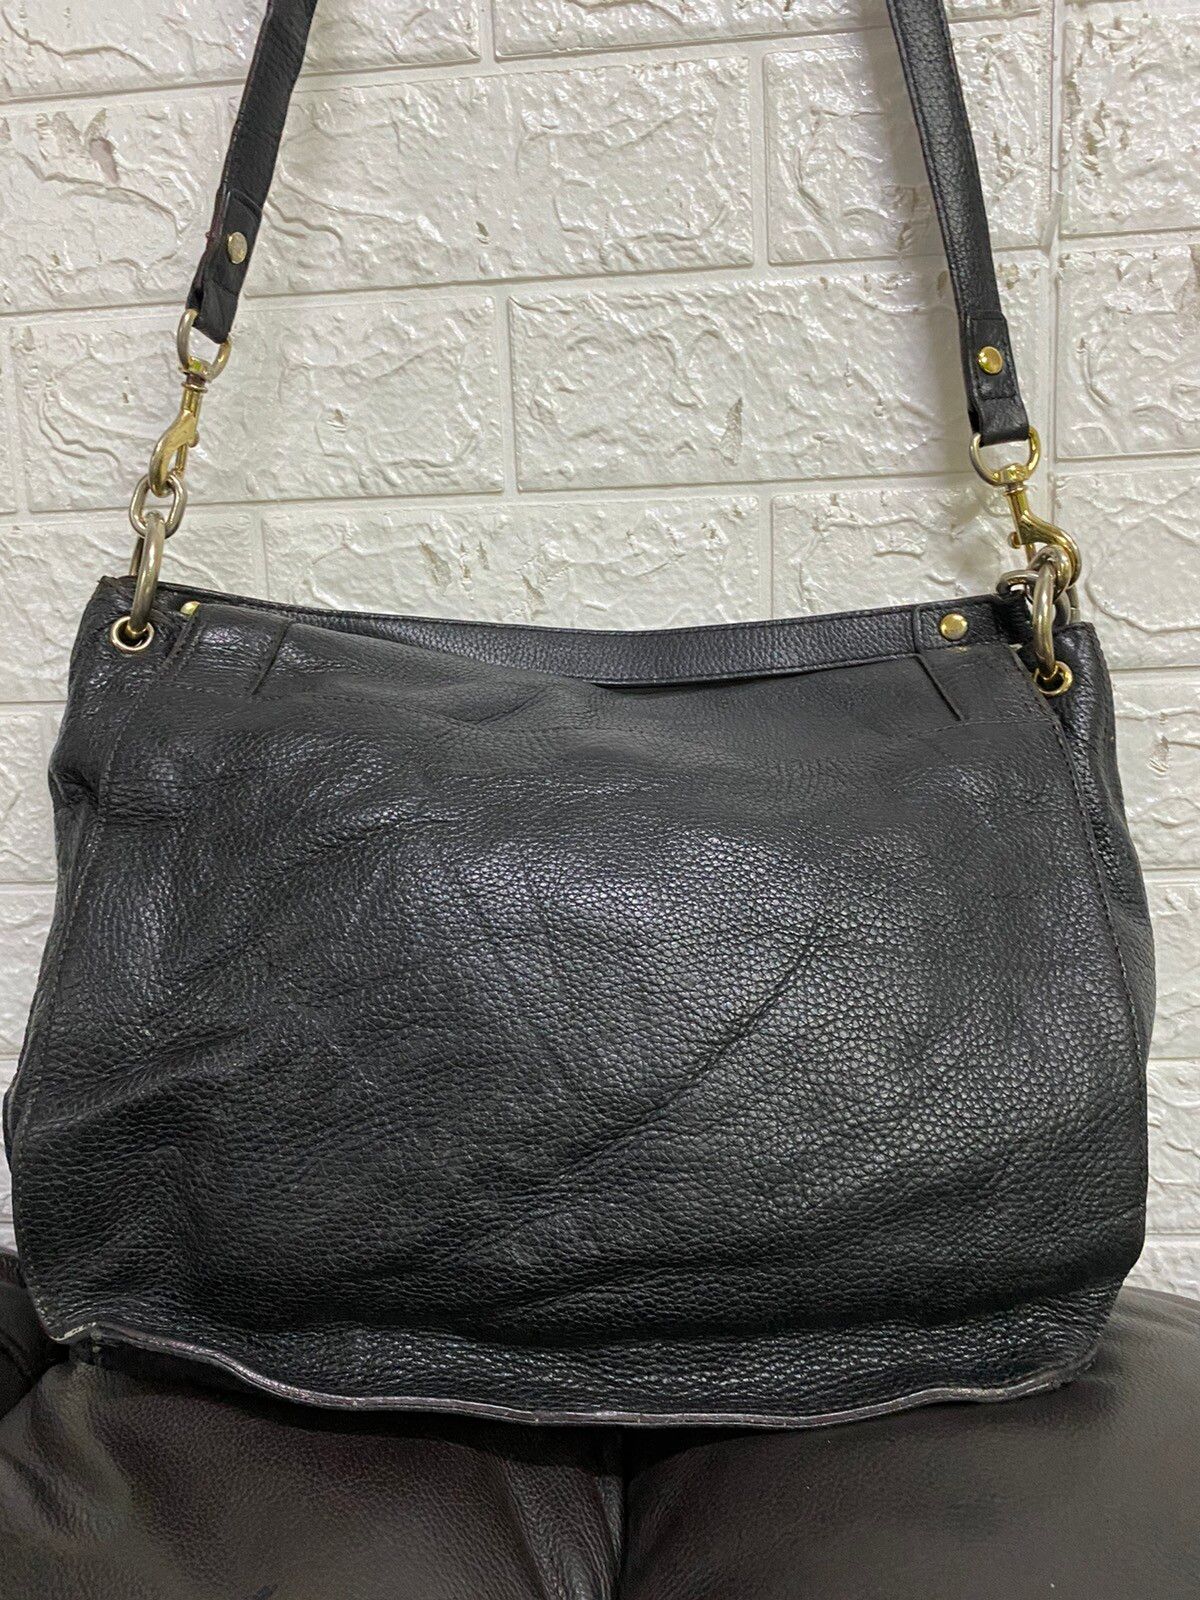 Authentic MCM Leather Shoulder Bag - 3